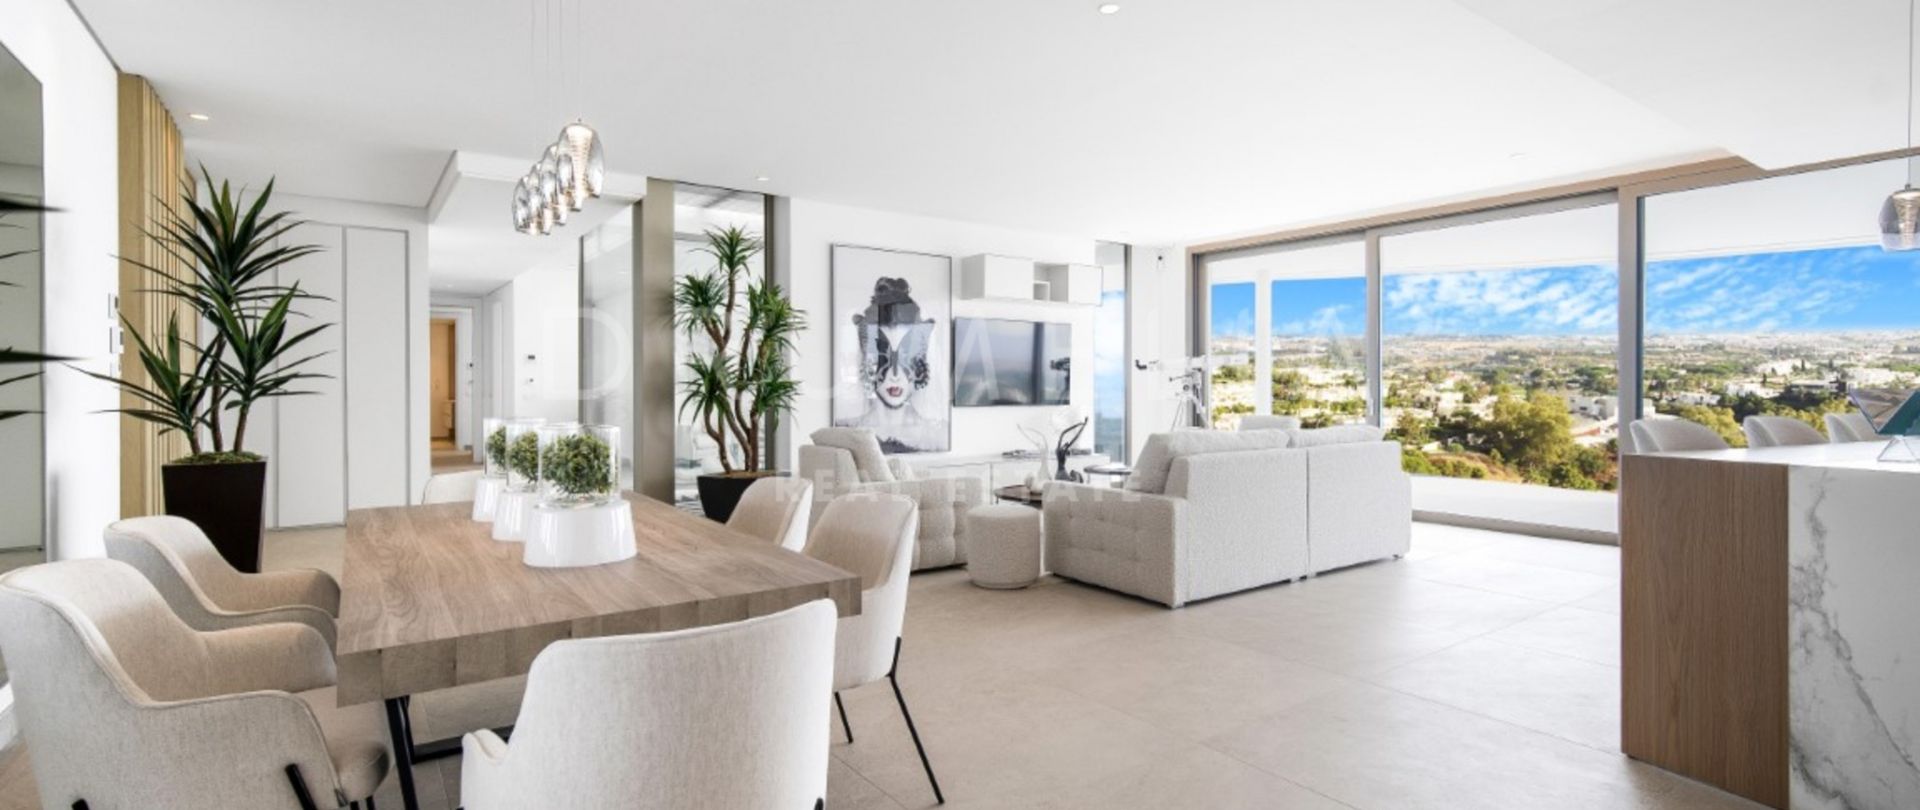 Neues luxuriöses, modernes Apartment mit Meerblick in der kultigen Anlage The View, Benahavis